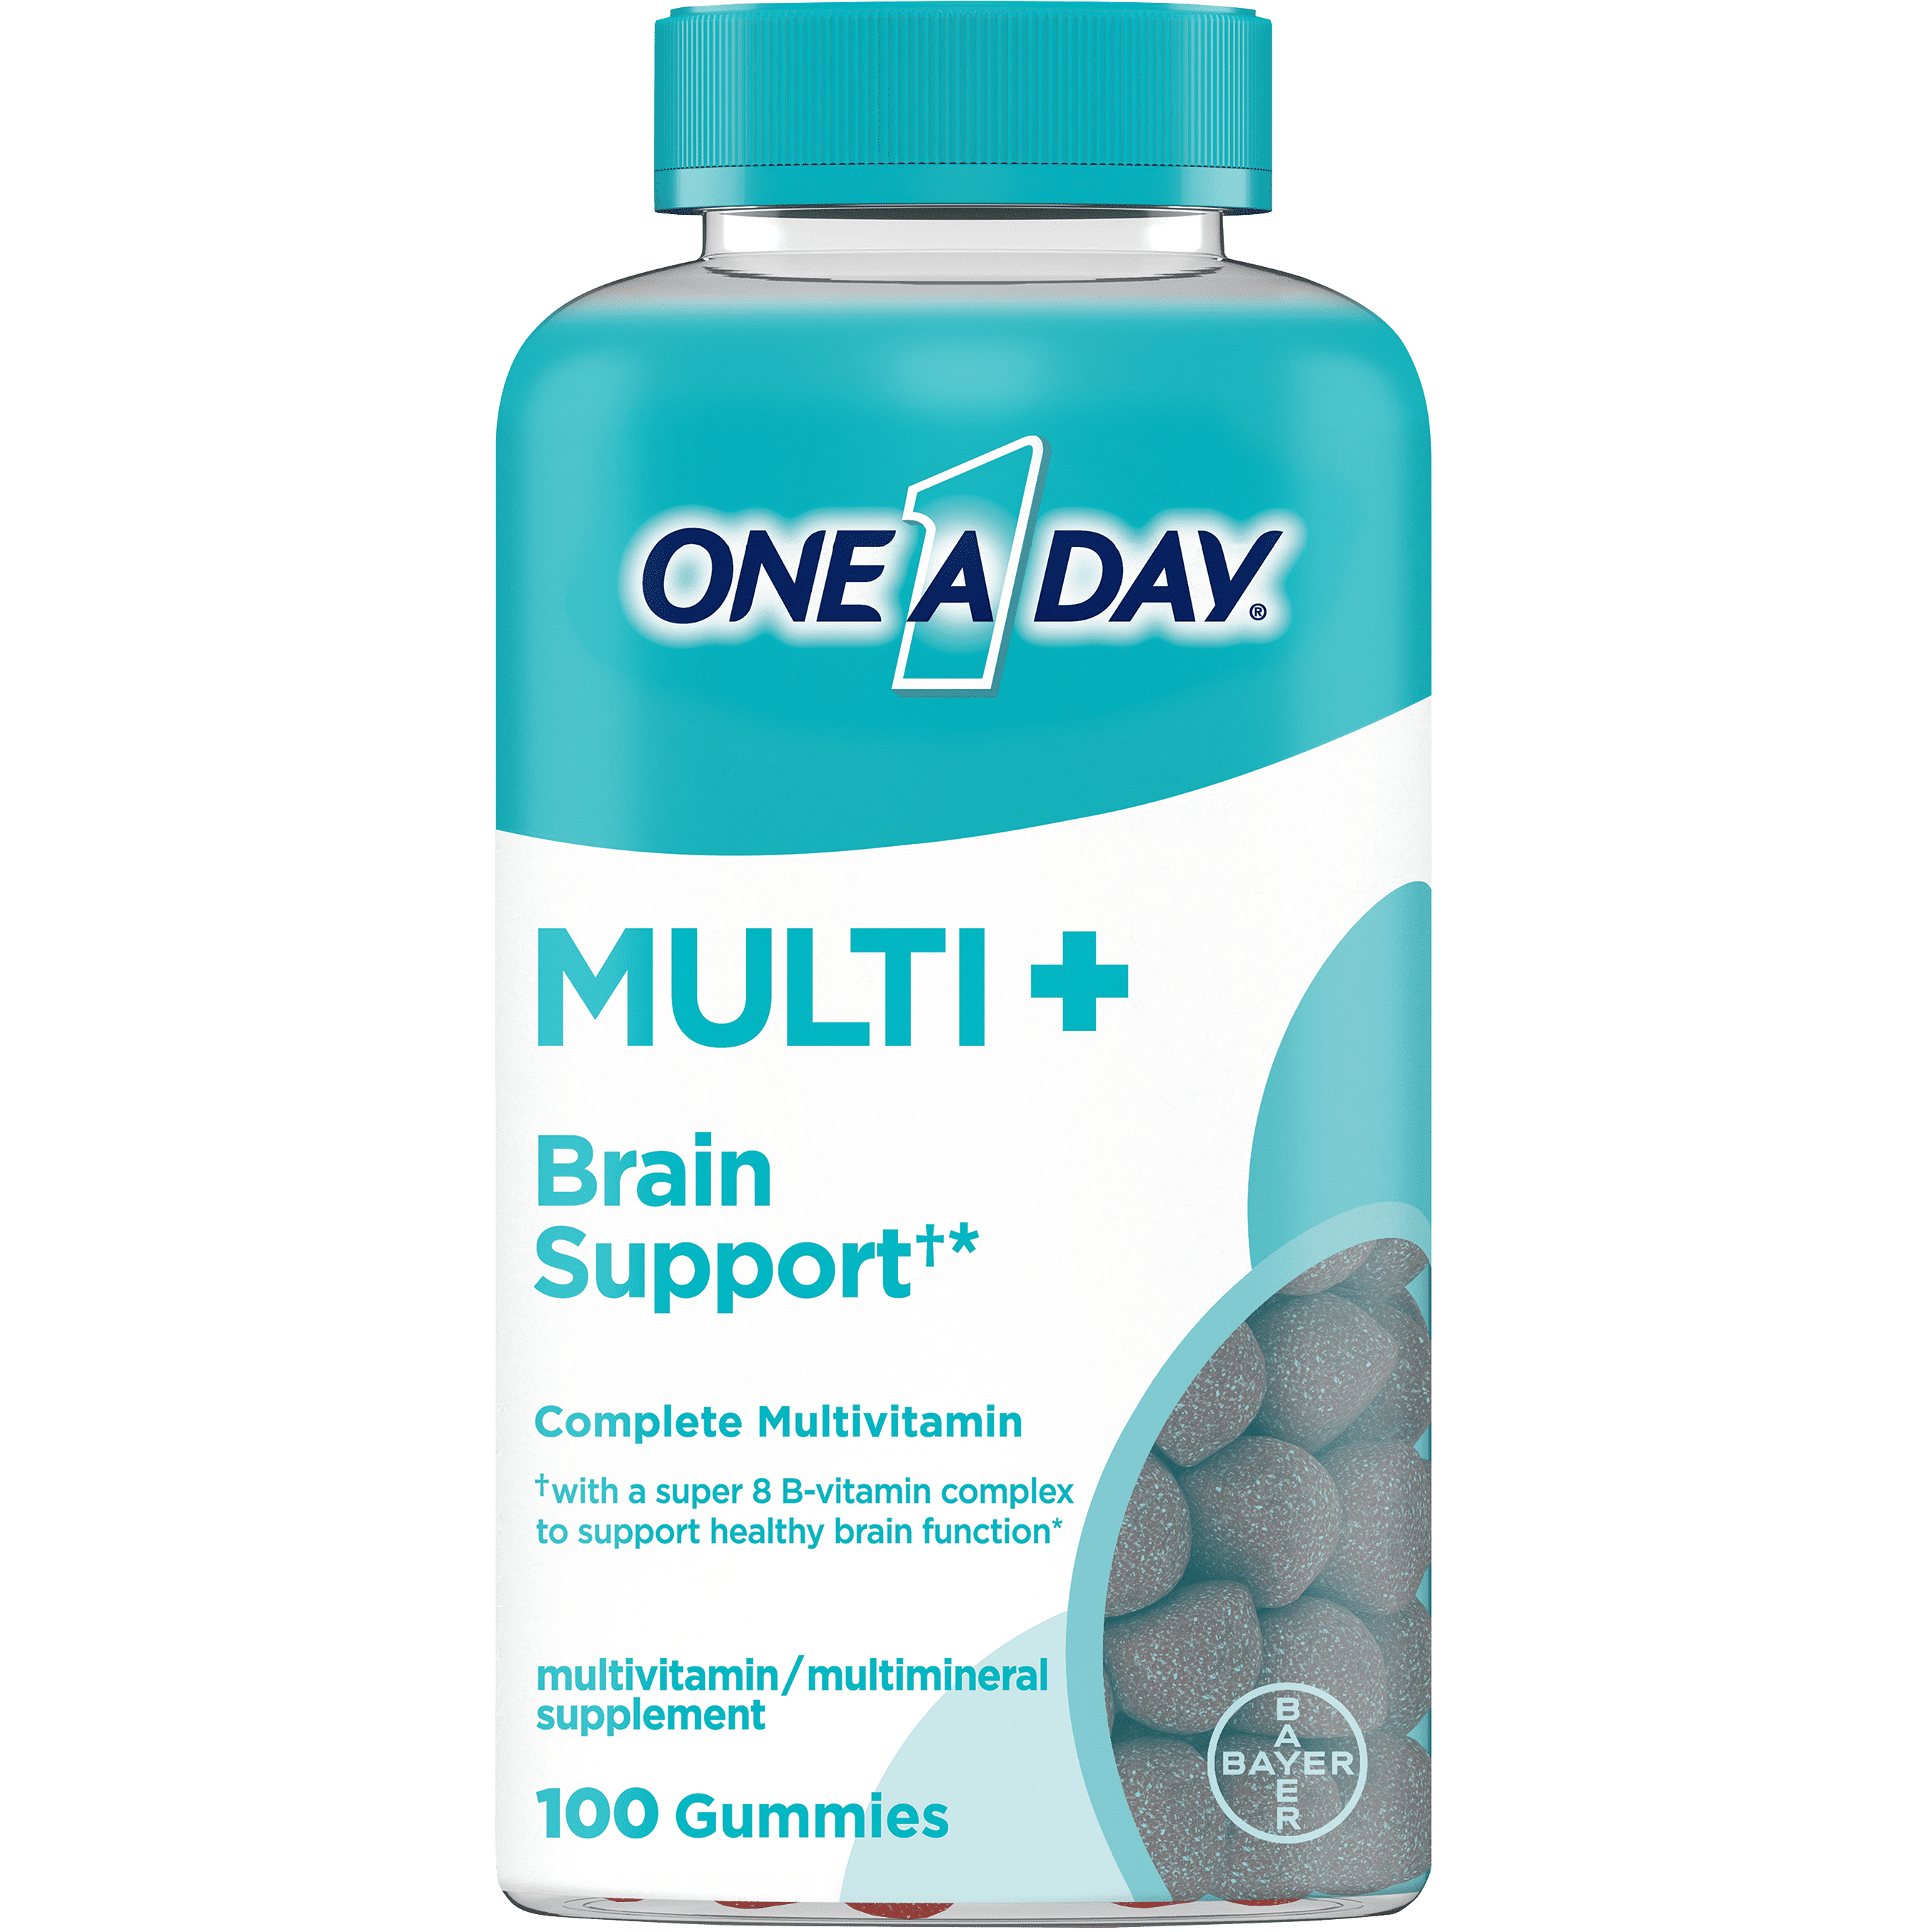 One A Day MULTI+ Brain Support Gummy Multivitamin, 100 Count